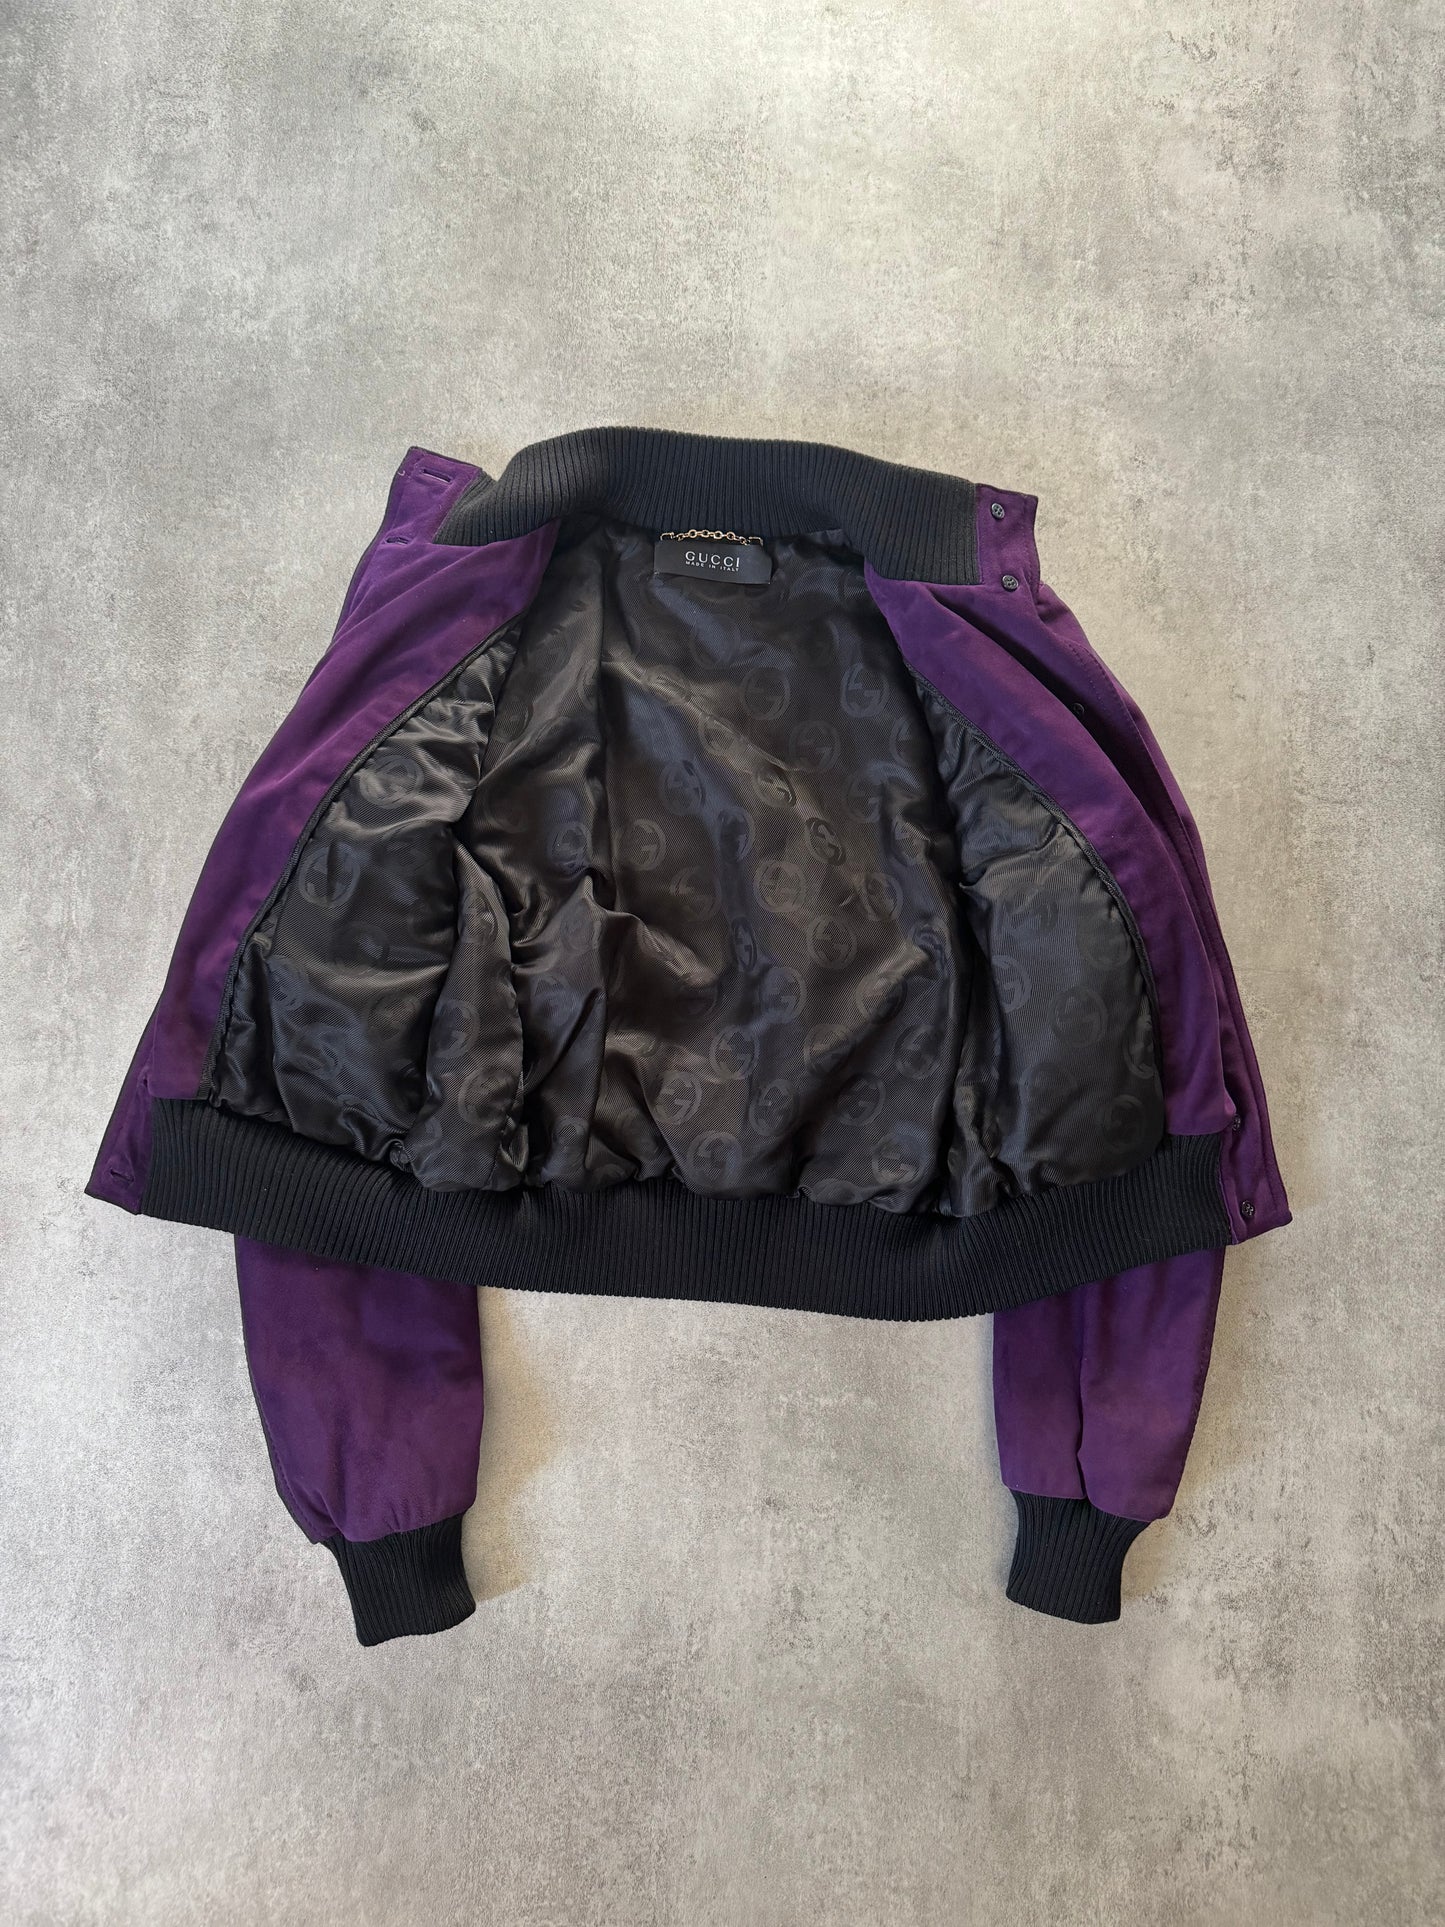 Gucci Purple Madonna Leather Jacket by Frida Giannini (S) - 5